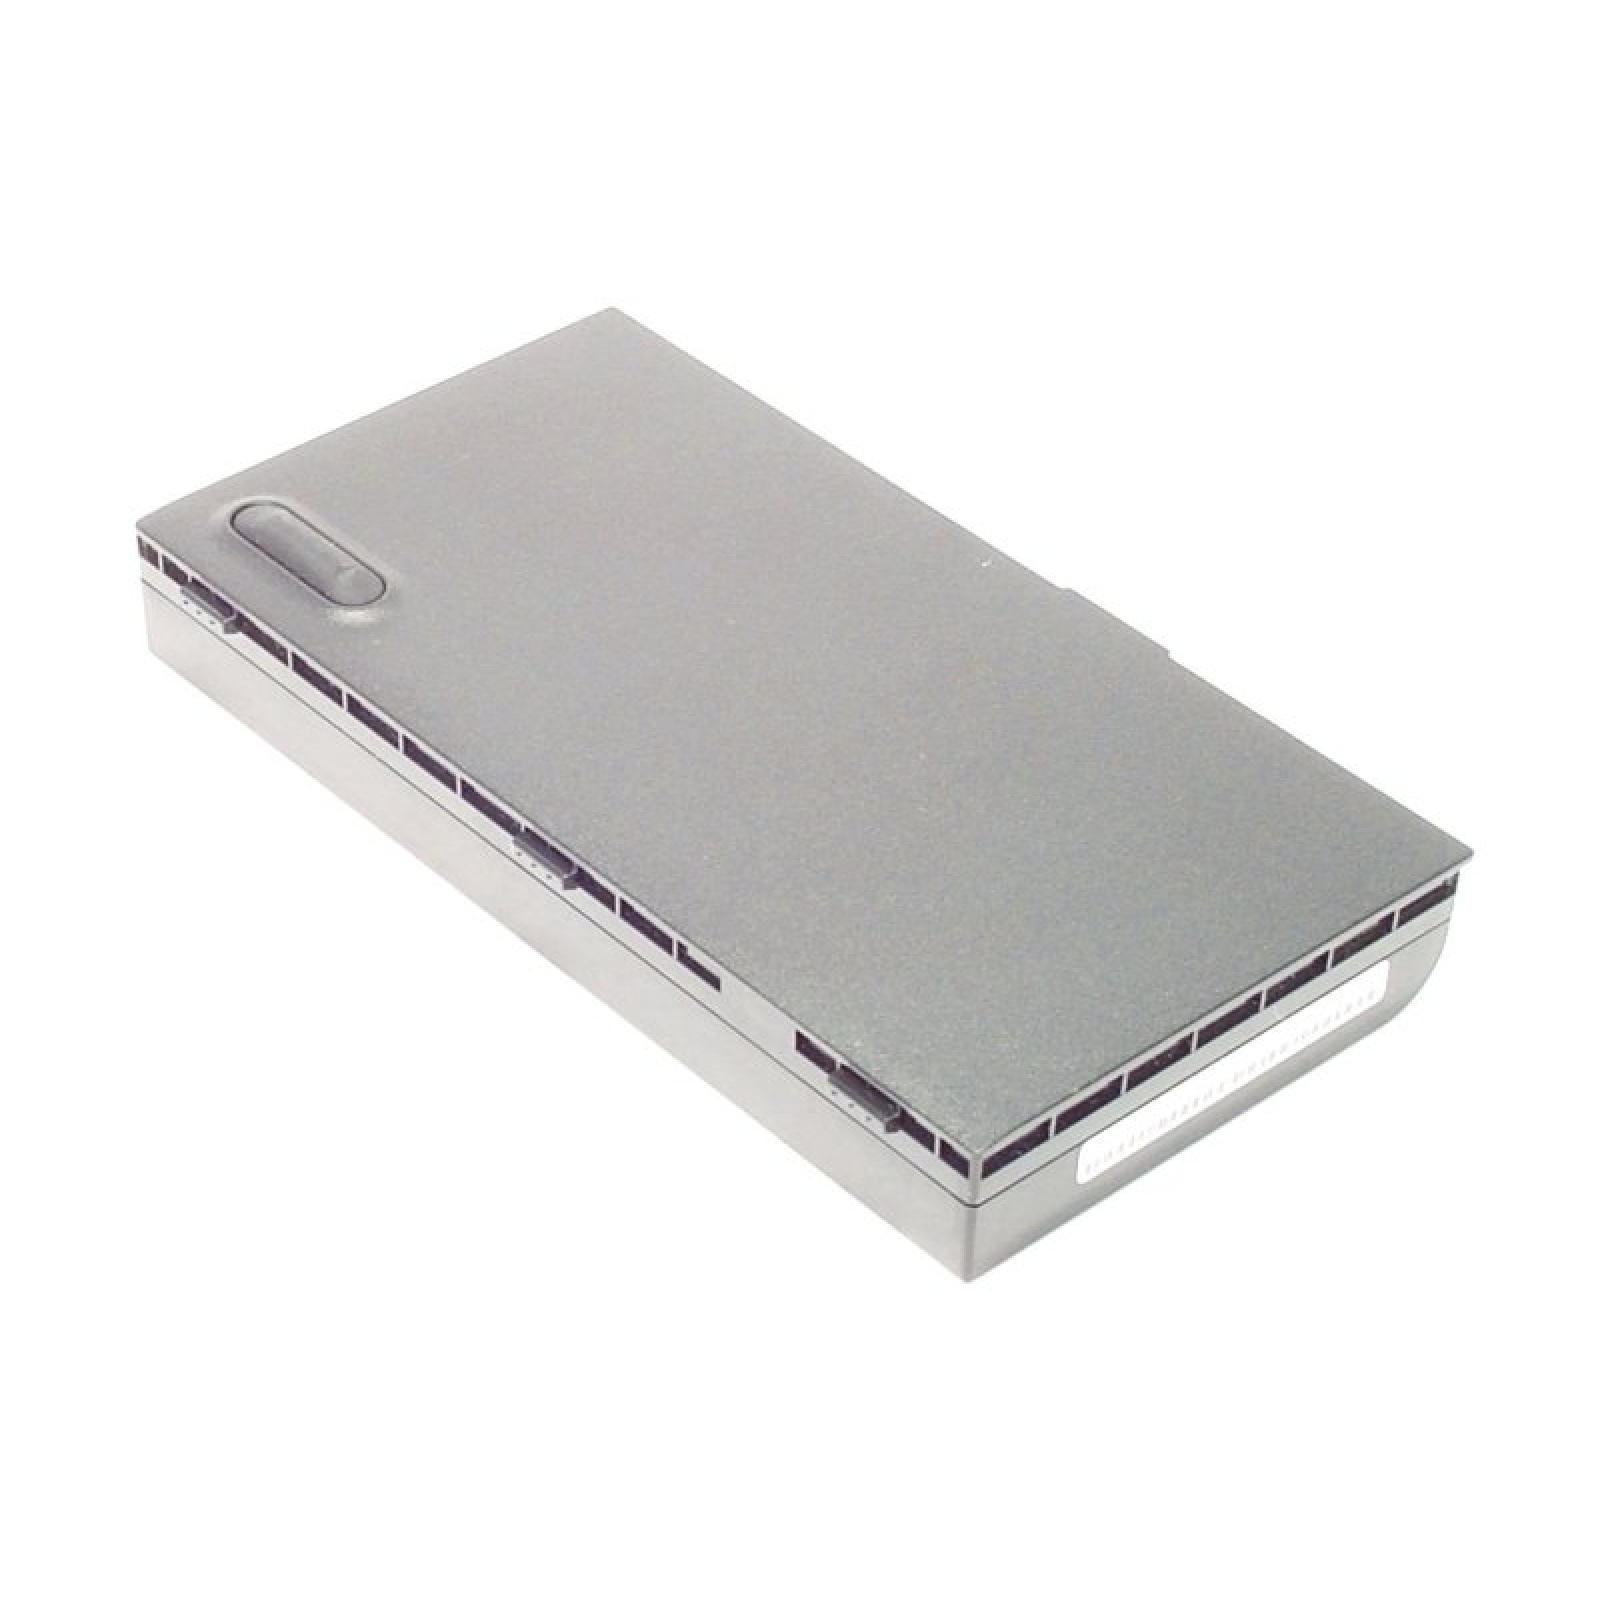 A32-H26 Notebook-Akku, Lithium-Ionen MTXTEC Volt, mAh LiIon, 4400mAh 14.8V, Akku für BENQ 14.8 (LiIon) 4400